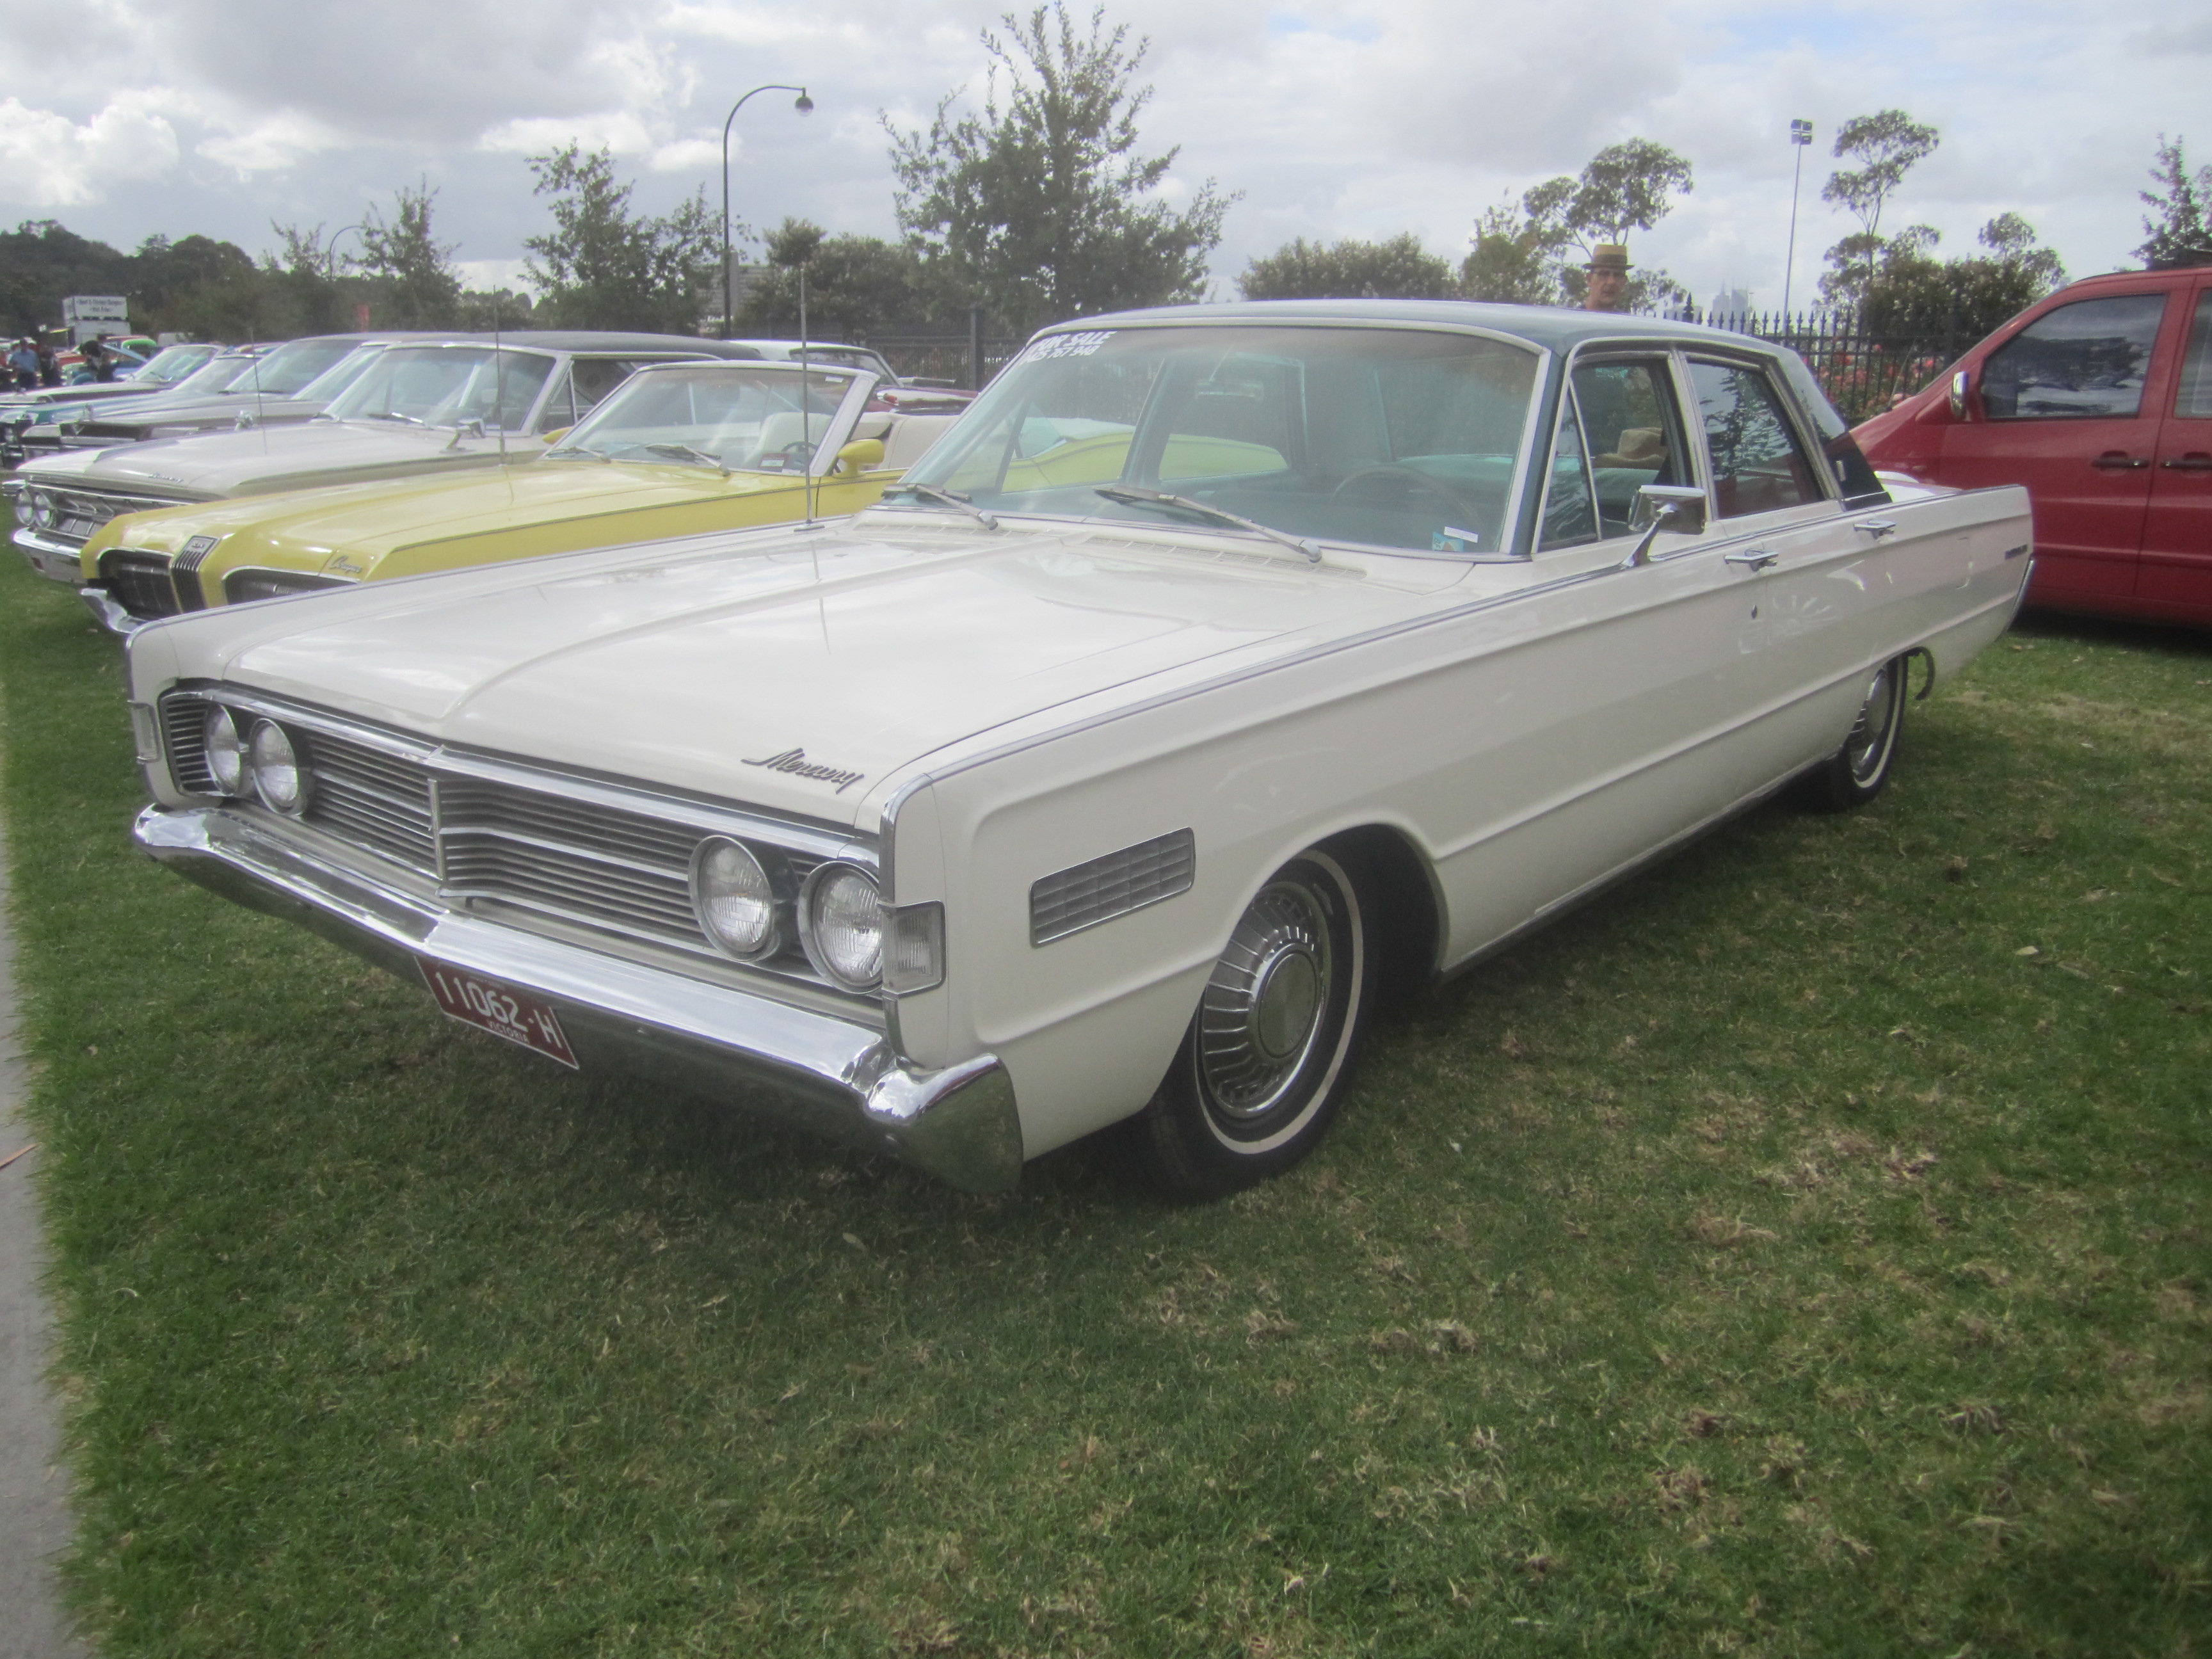 File:1966 Mercury Monterey Sedan.jpg - Wikimedia Commons